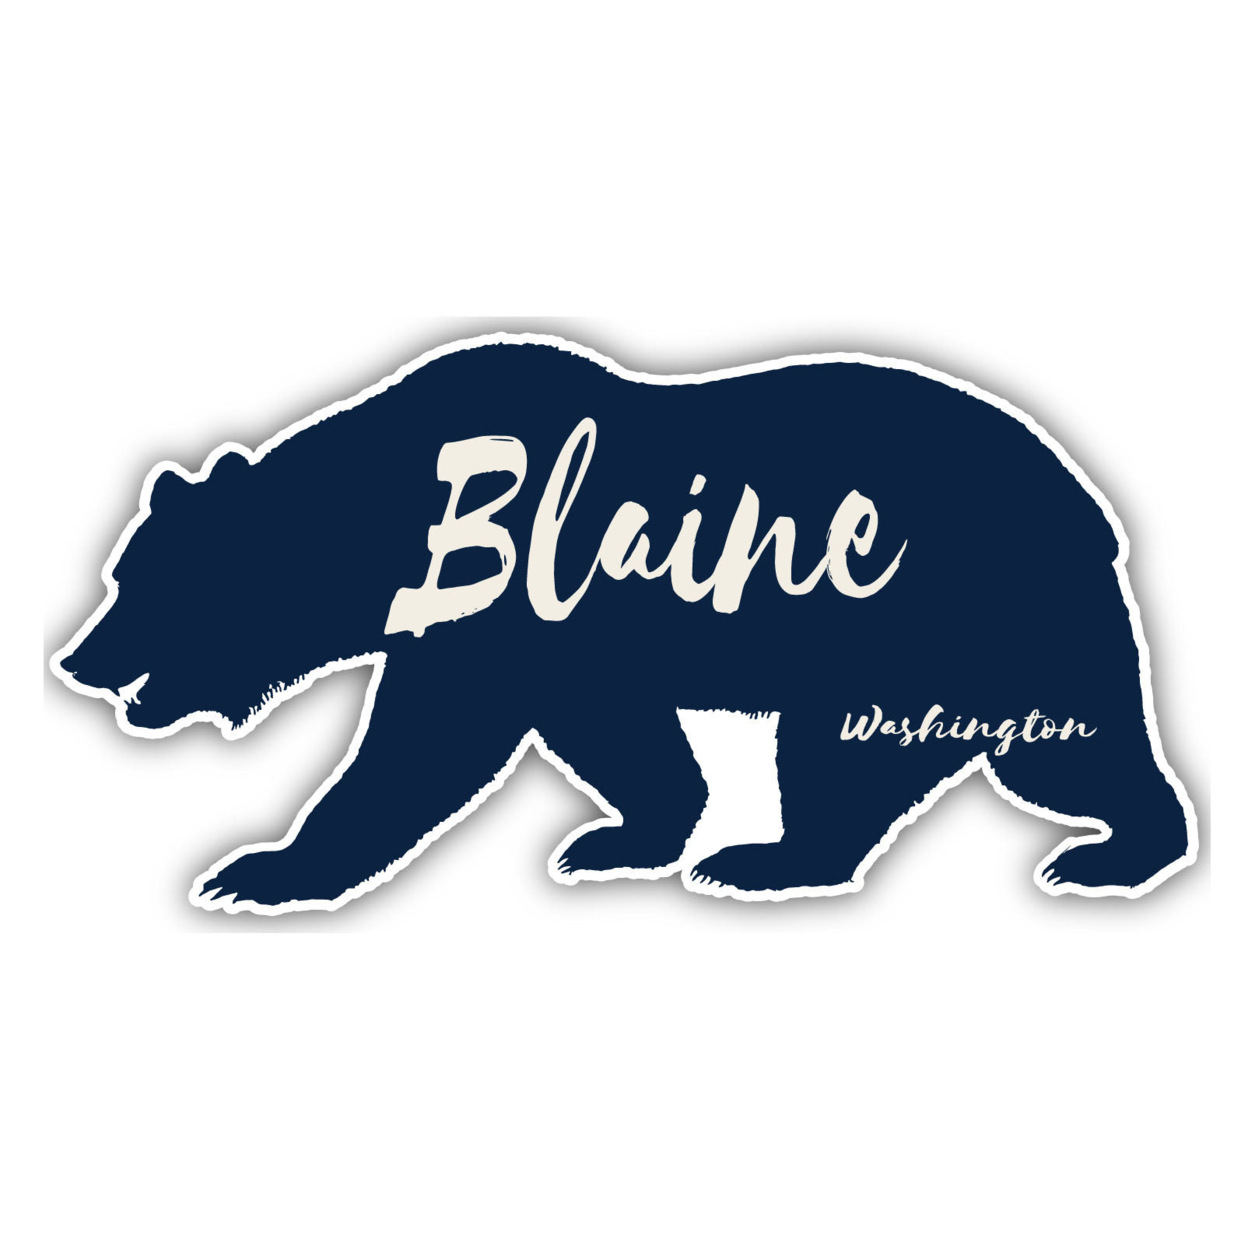 Blaine Washington Souvenir Decorative Stickers (Choose Theme And Size) - 4-Pack, 2-Inch, Bear